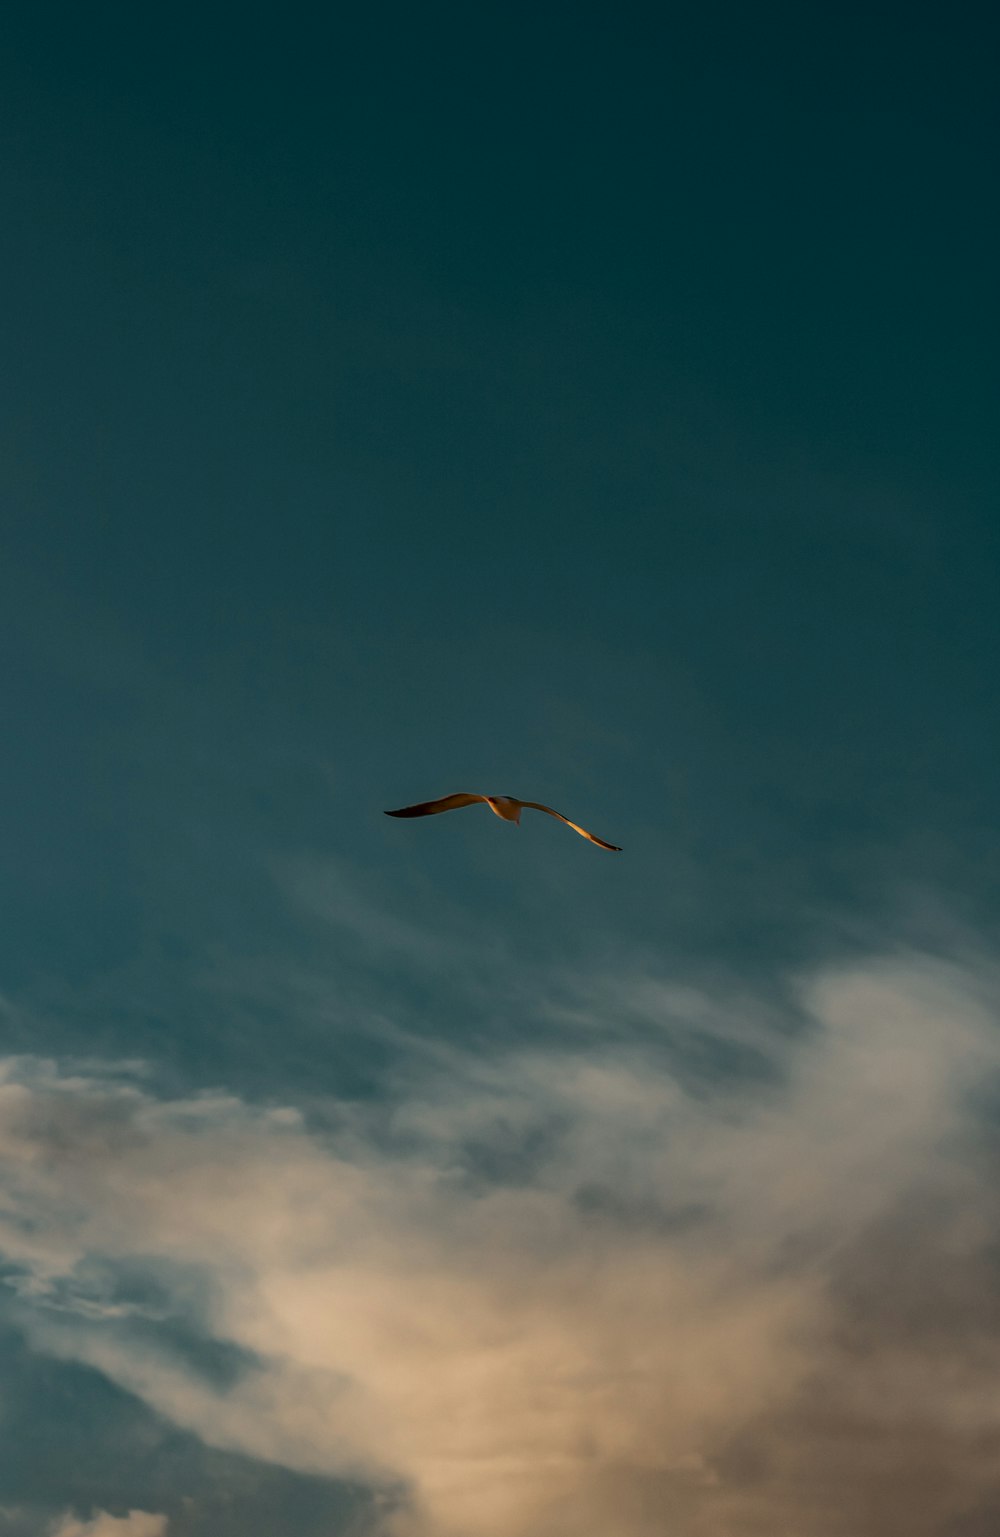 a bird flying through a cloudy blue sky